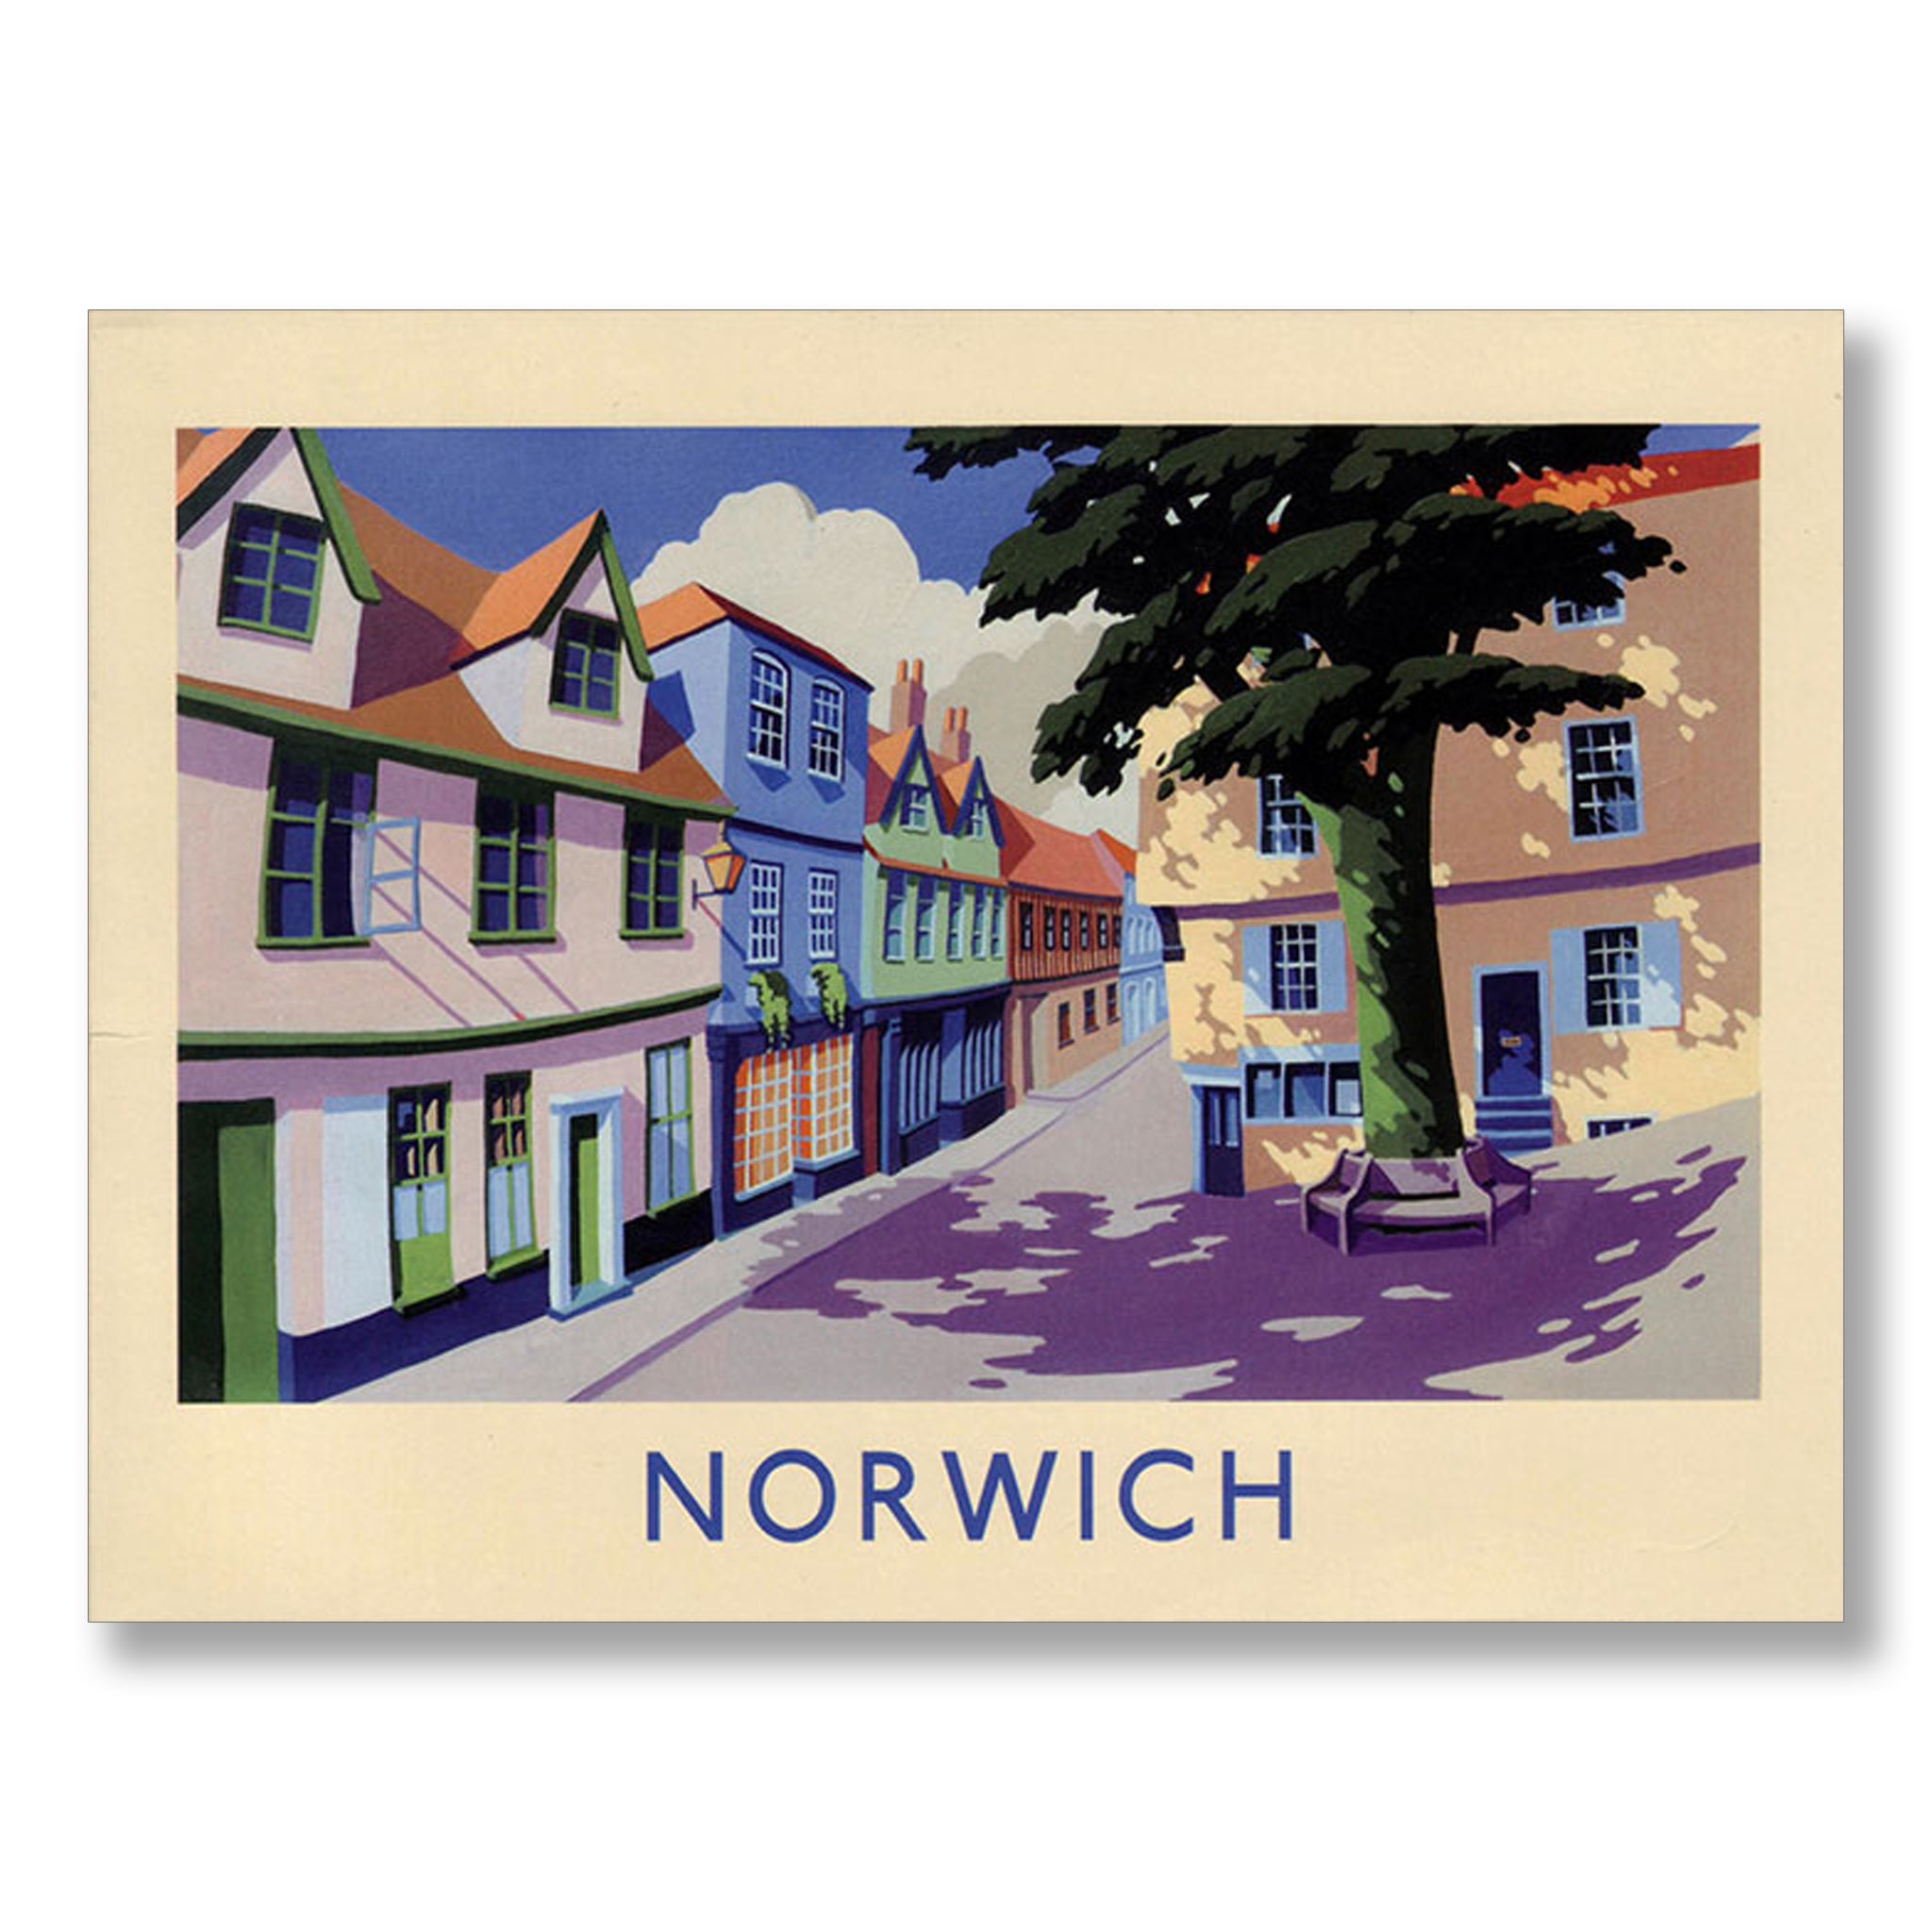 Norwich, Norfolk 2012 by David Kirk | Nicholas Engert Interiors